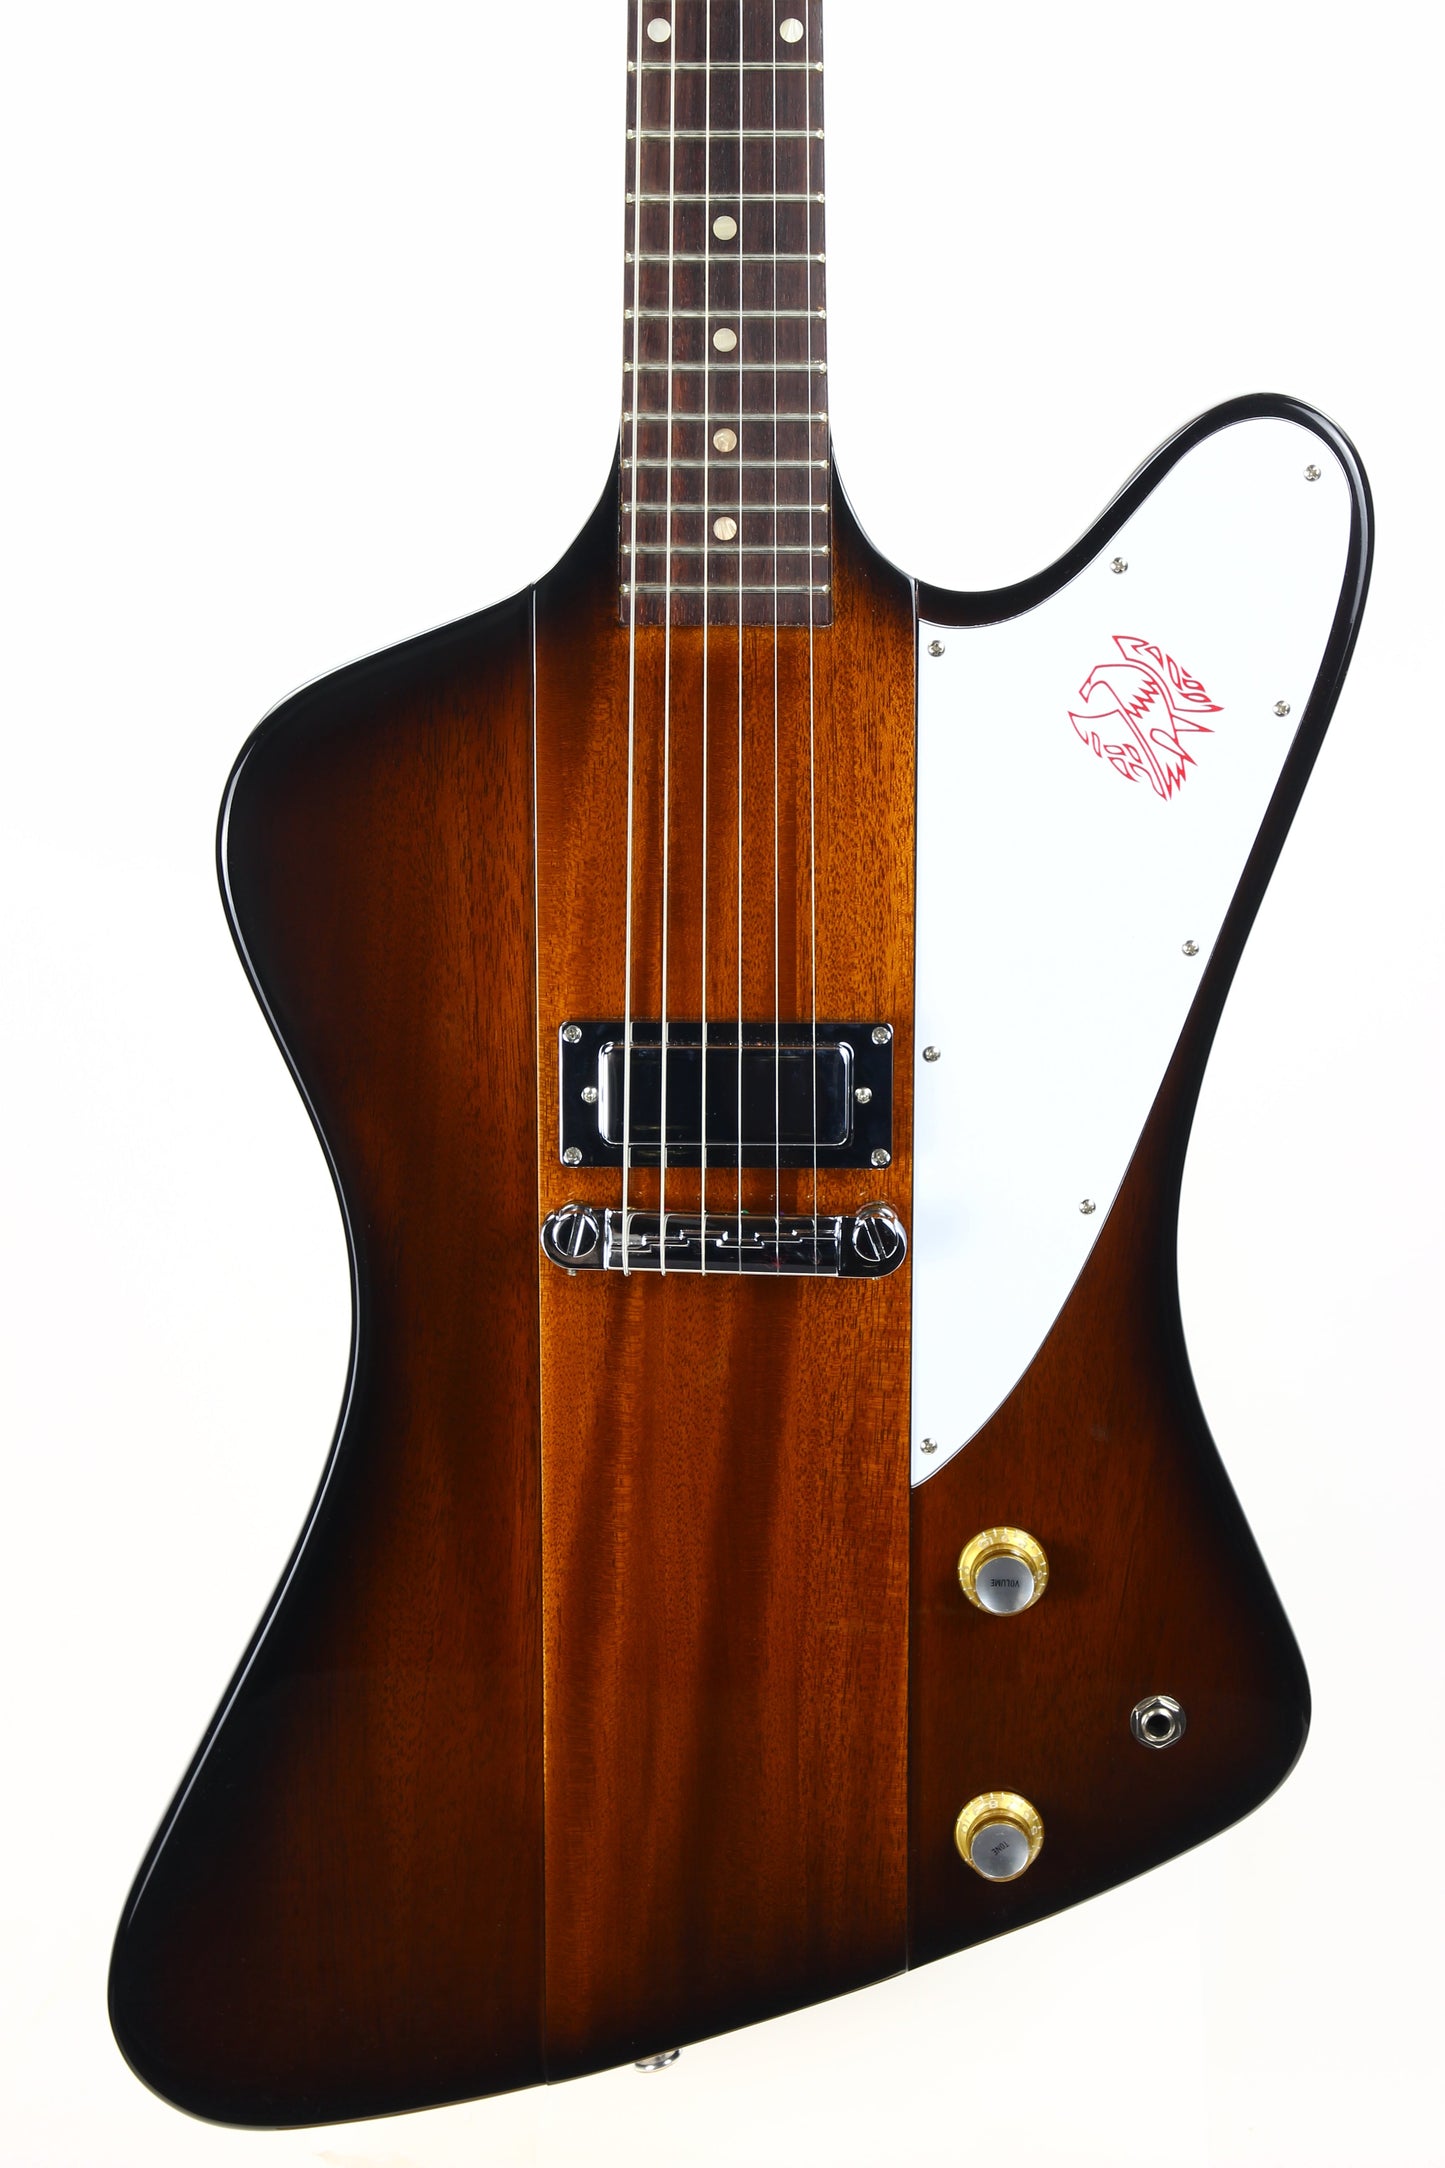 2019 Gibson Exclusive Firebird I Limited Edition Vintage Sunburst - One Mini Humbucker ala Eric Clapton!